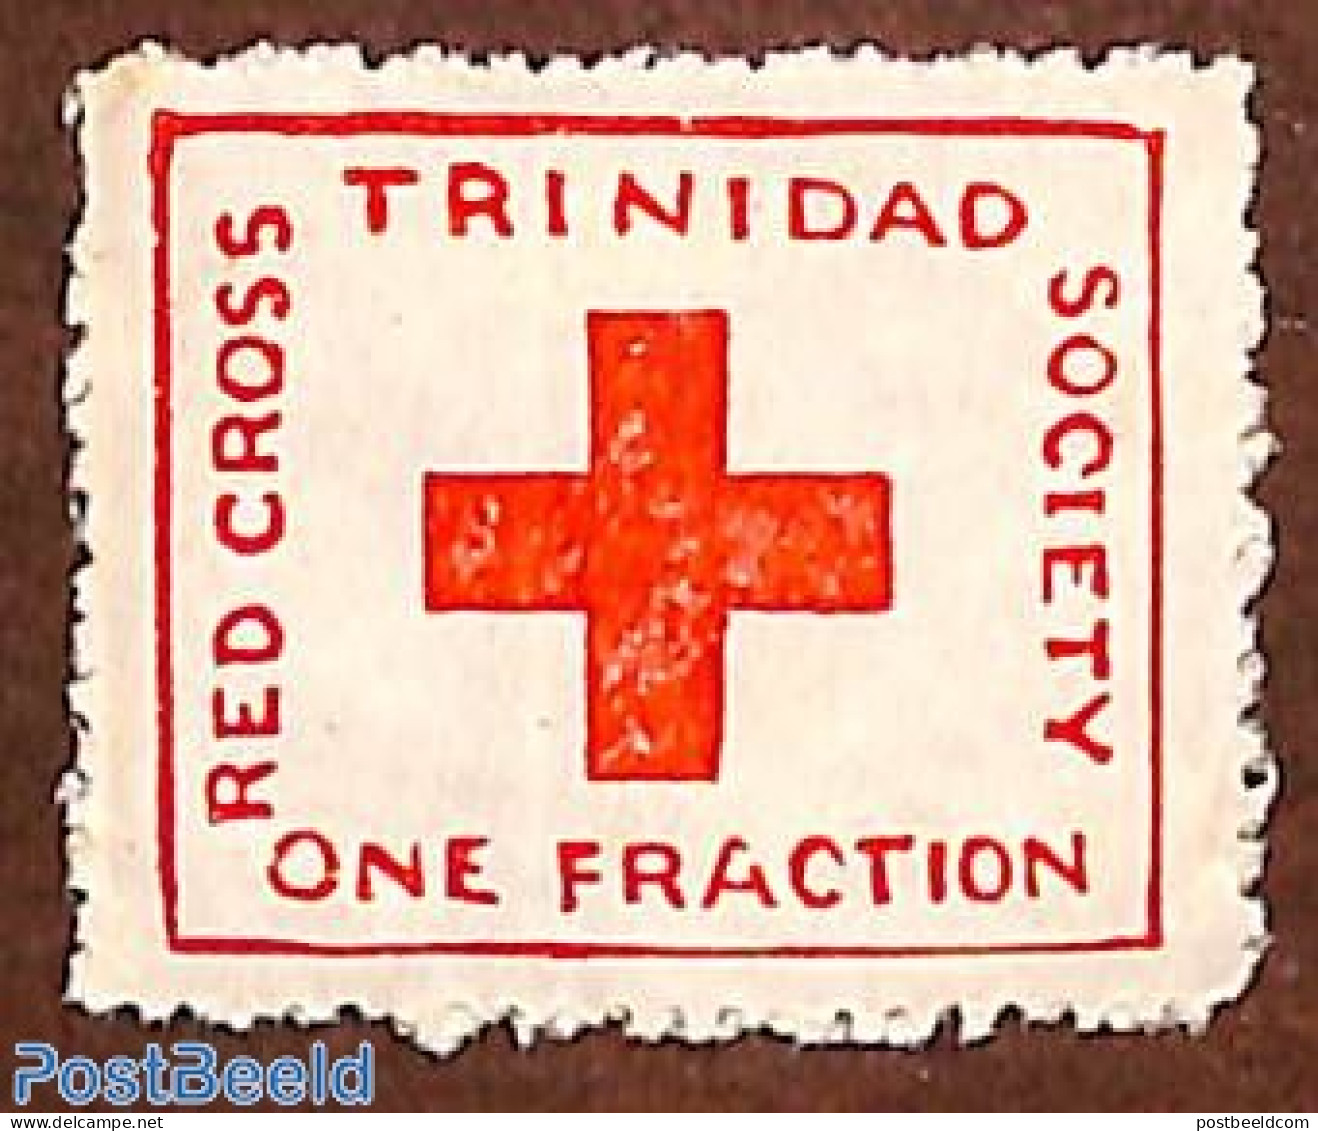 Trinidad & Tobago 1914 Red Cross 1v, Unused (hinged), Health - Red Cross - Croix-Rouge